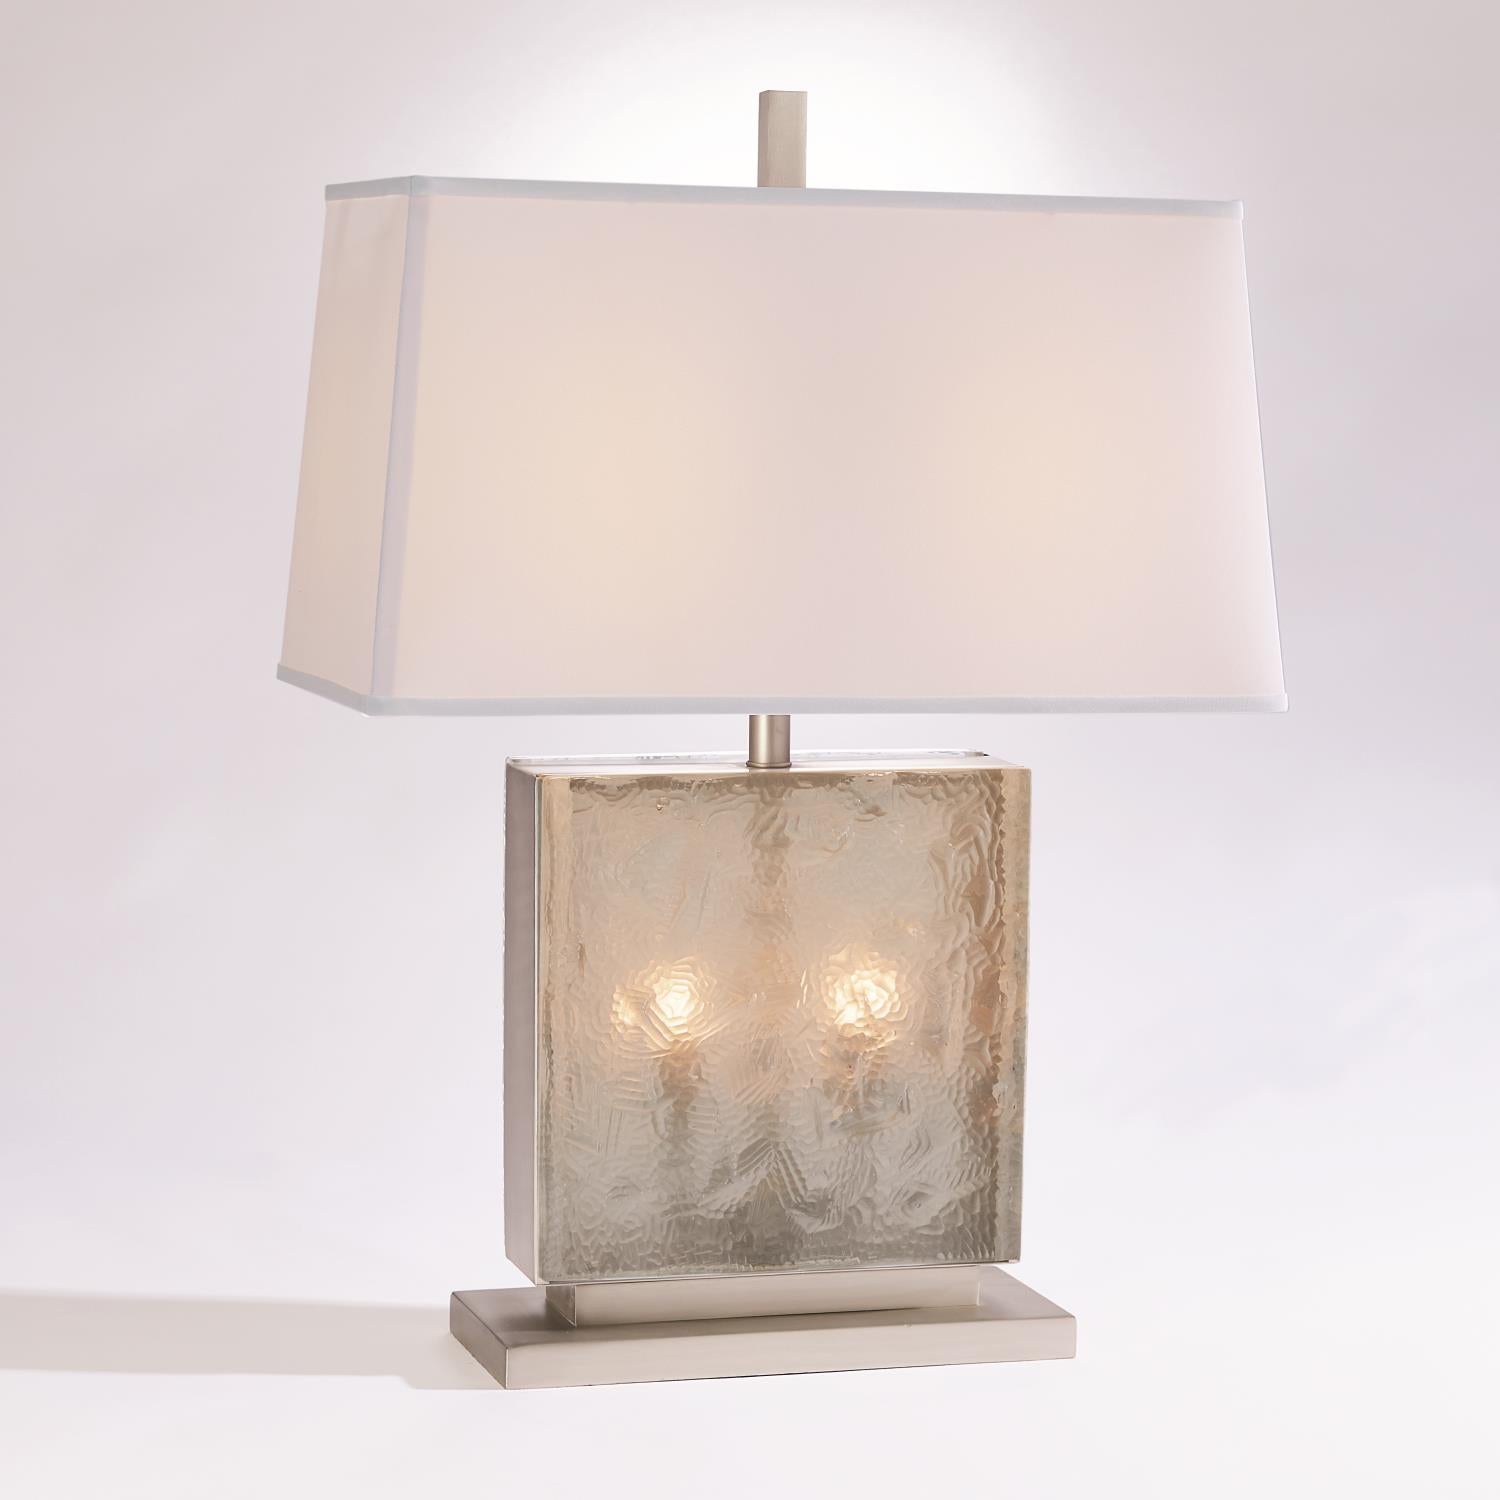 Cube Slab Table Lamp - Antique Nickel - Grats Decor Interior Design & Build Inc.